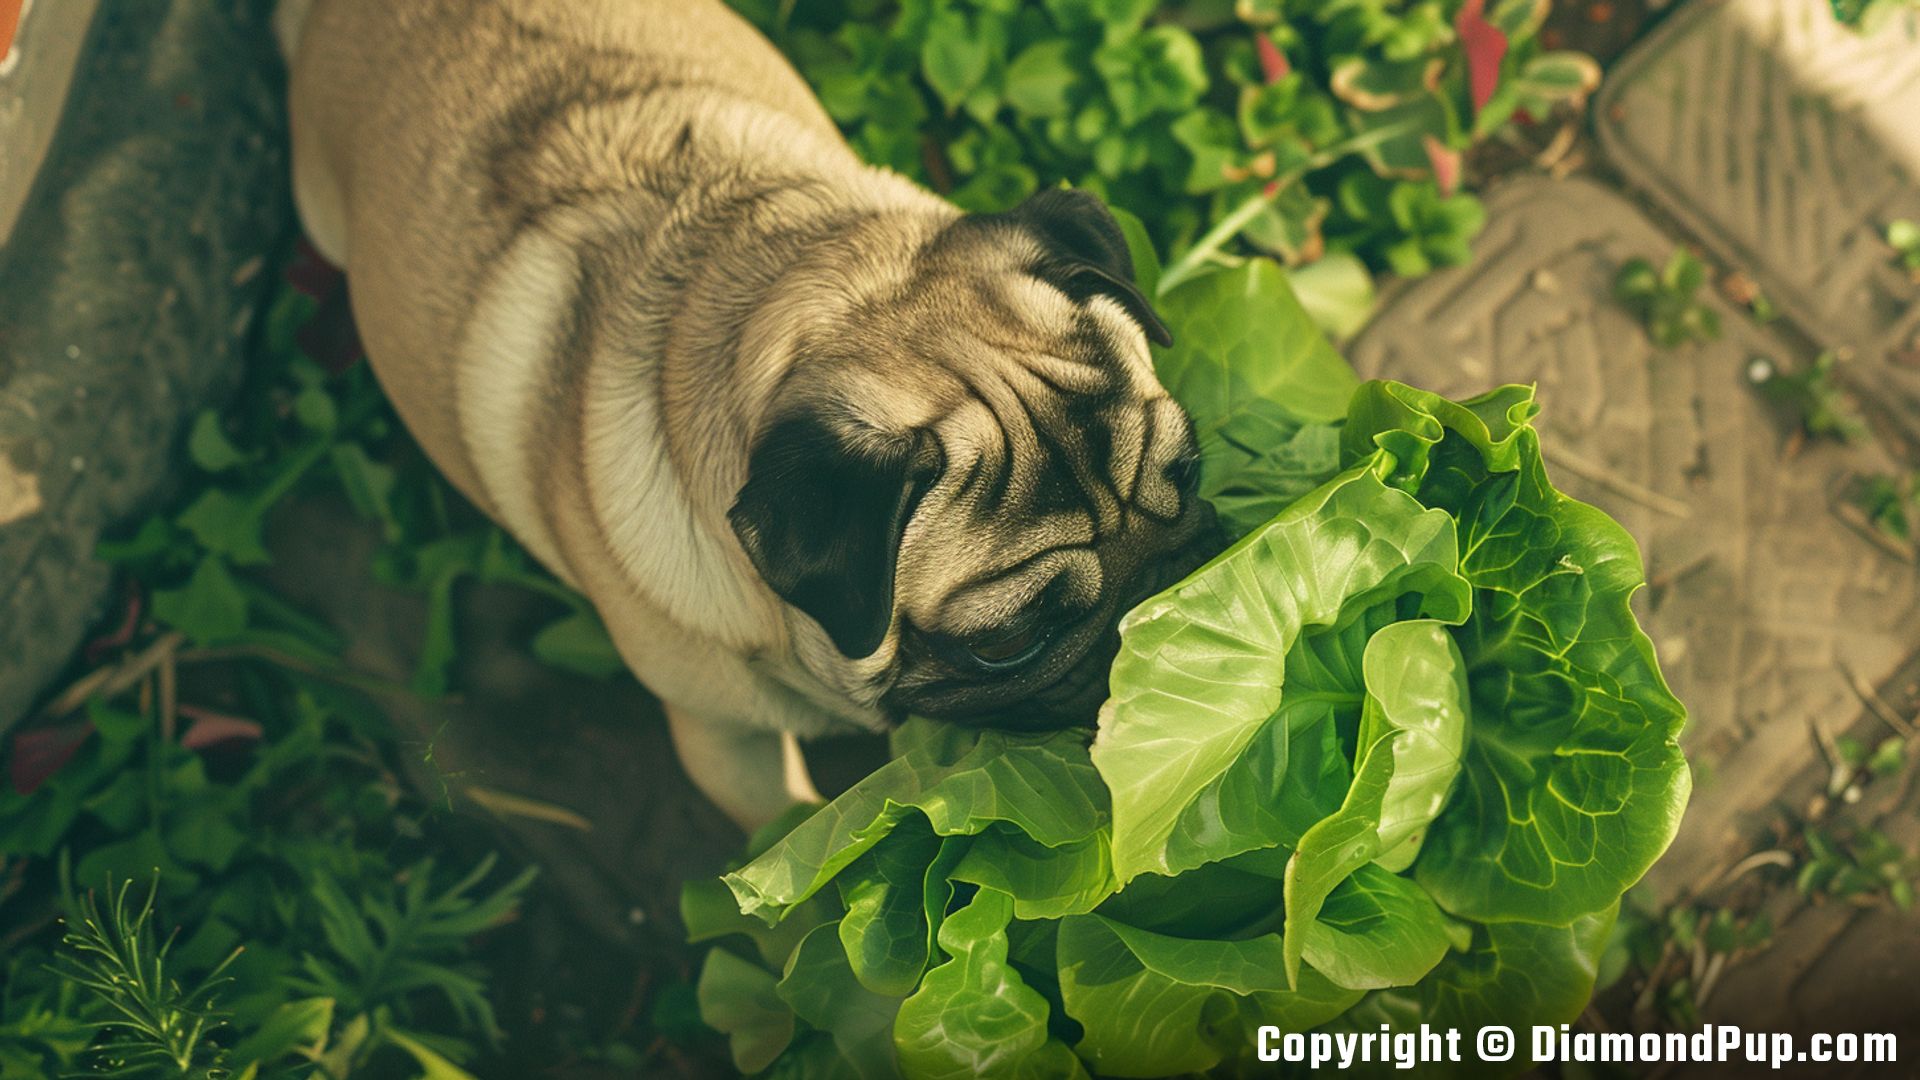 Photograph of a Cute Pug Eating Lettuce